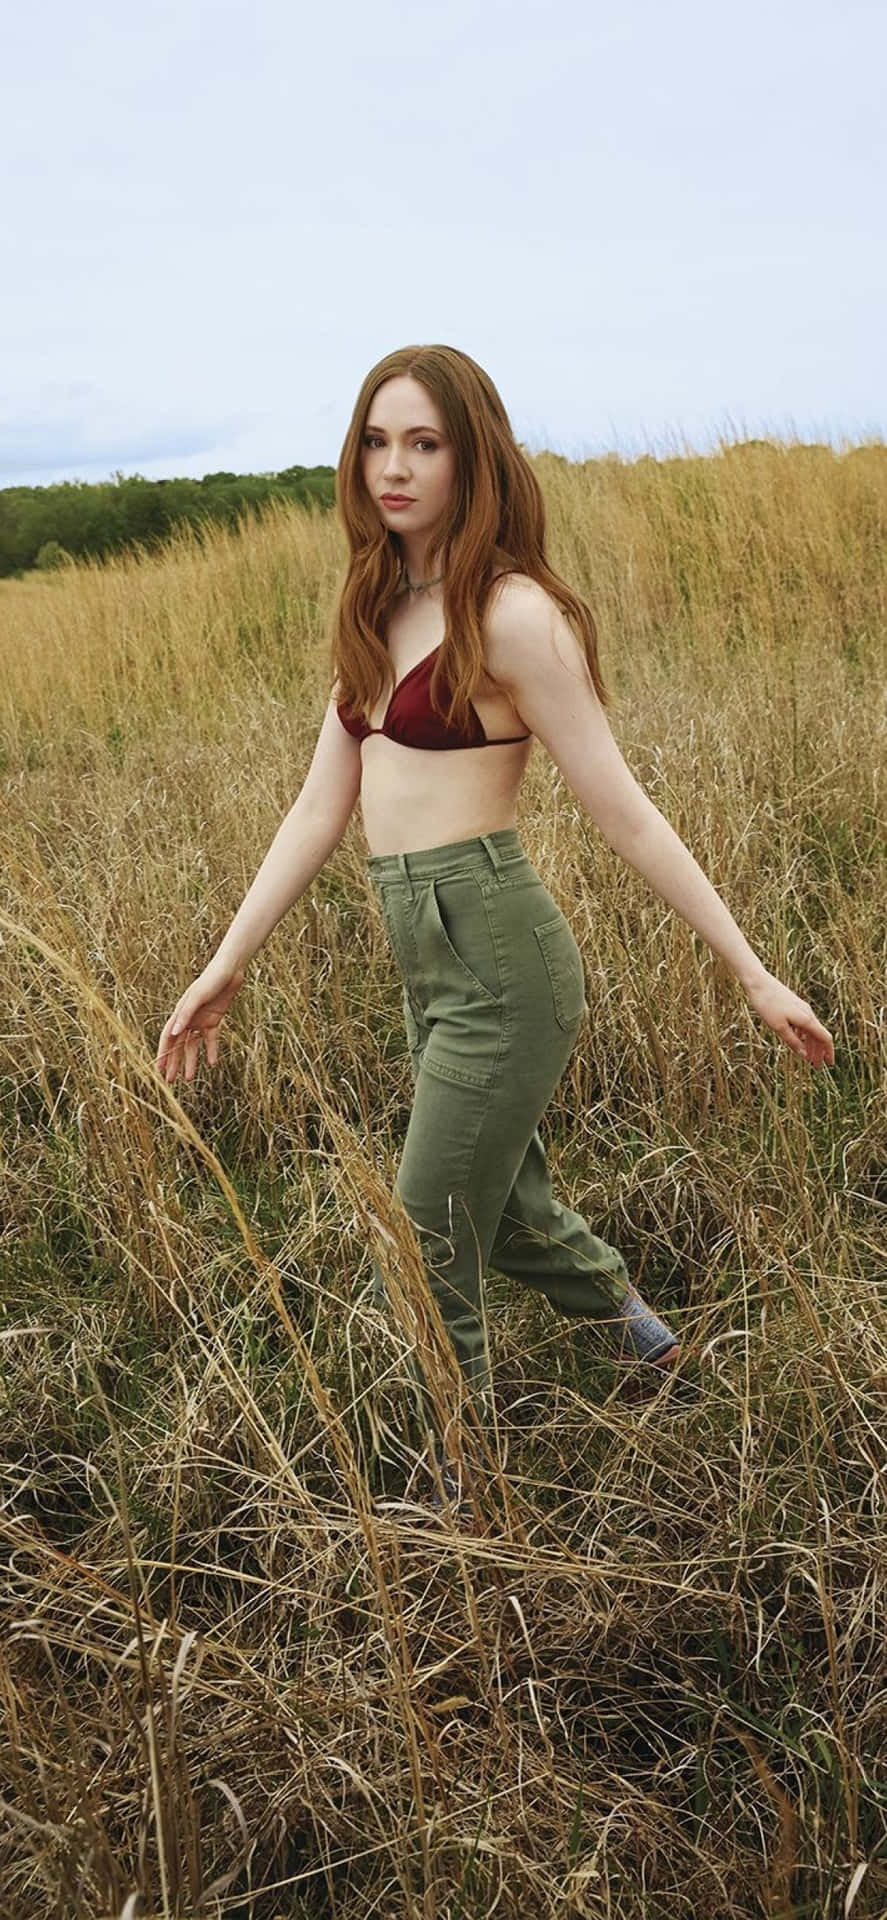 A Woman In A Bikini Standing In A Field Background